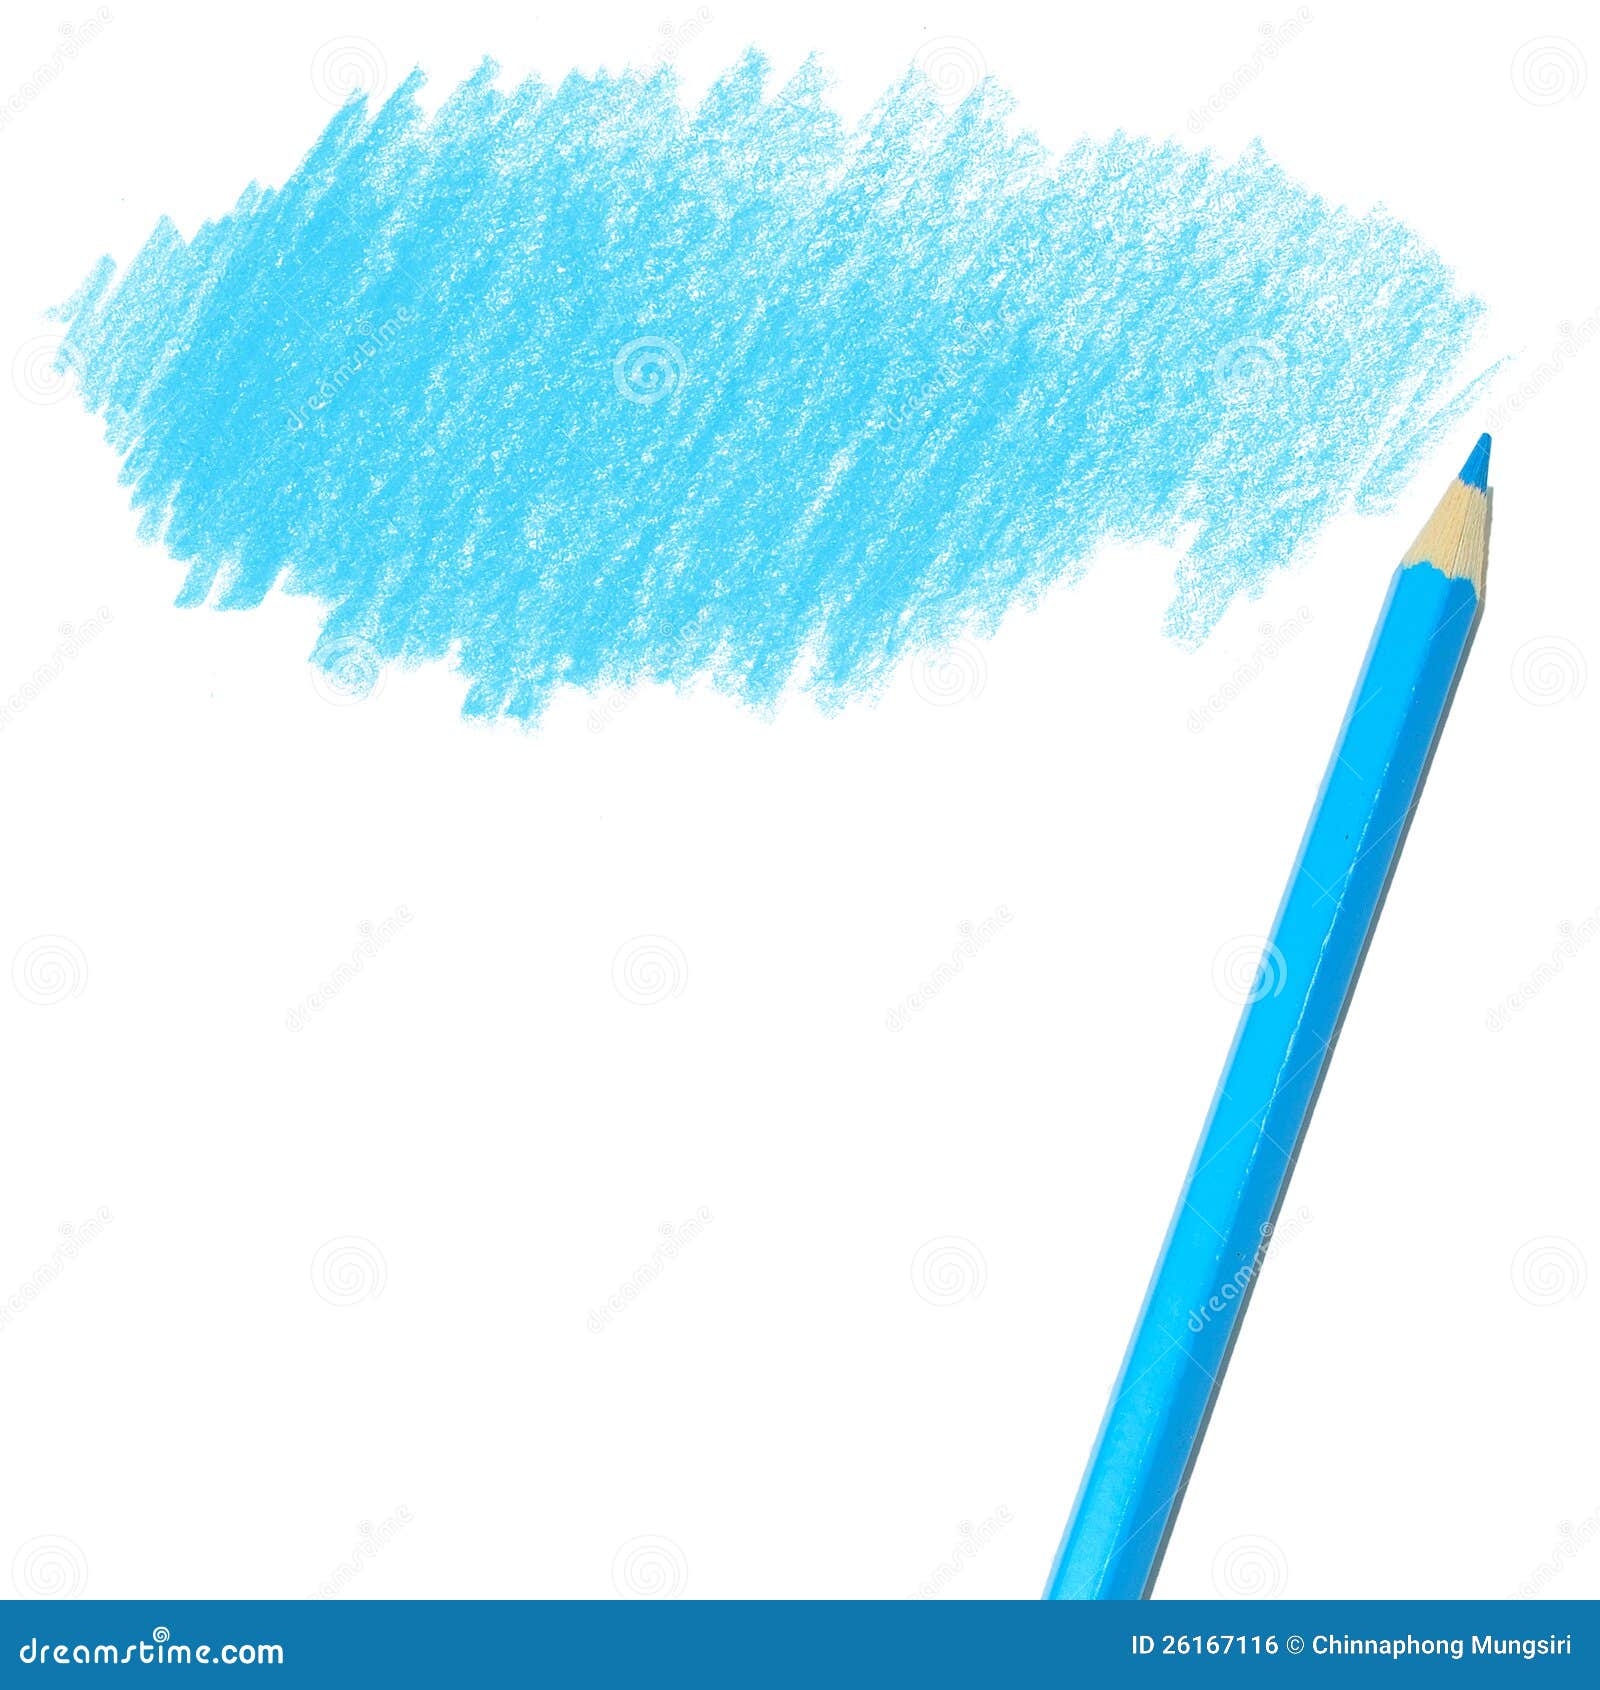 Blue Colored Pencil Drawing Stock Photo Image of descriptive